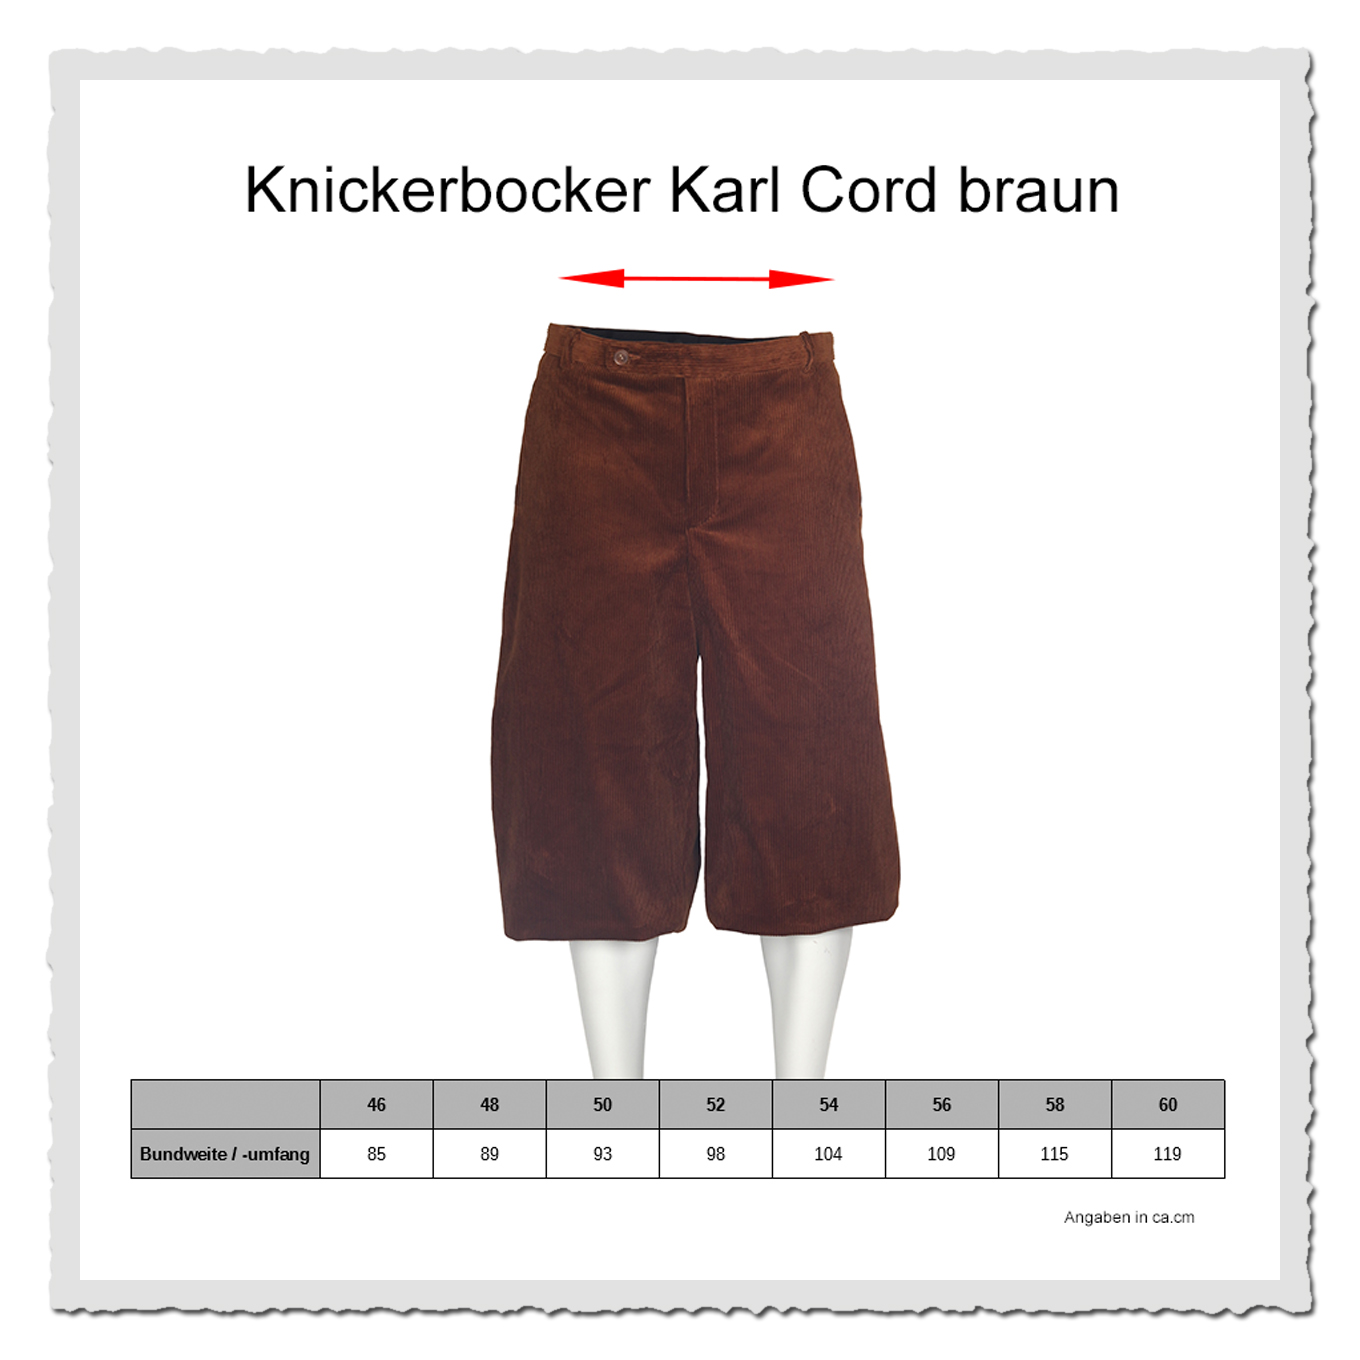 Knickerbocker Karl Cord braun